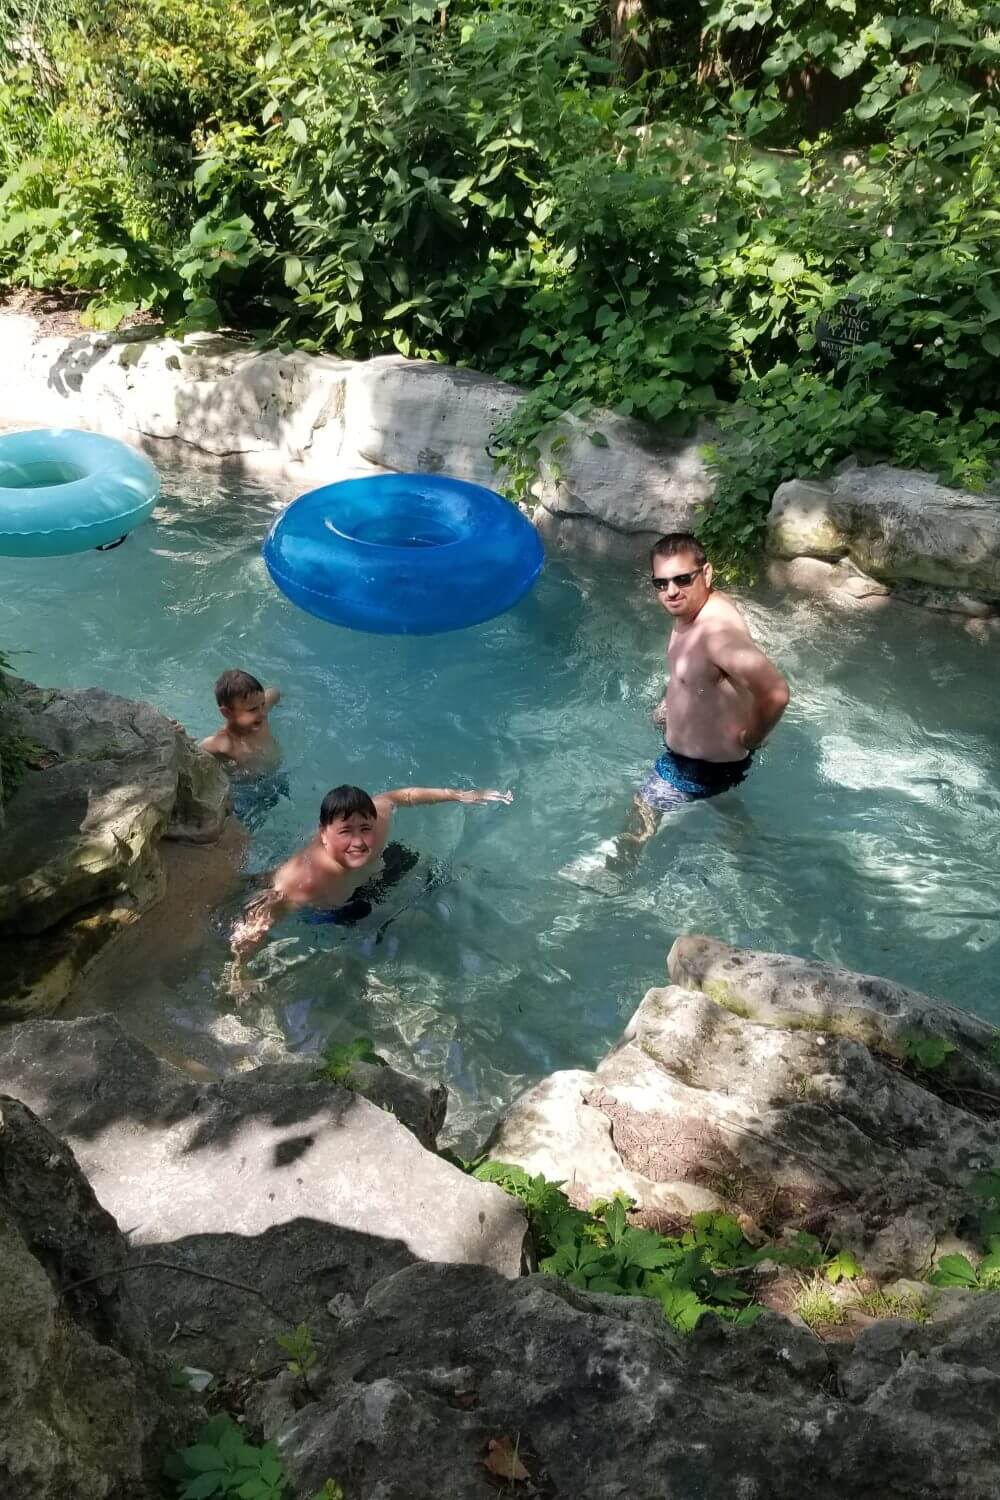 Kids enjoying the Lazy river at Big Cedar Lodge